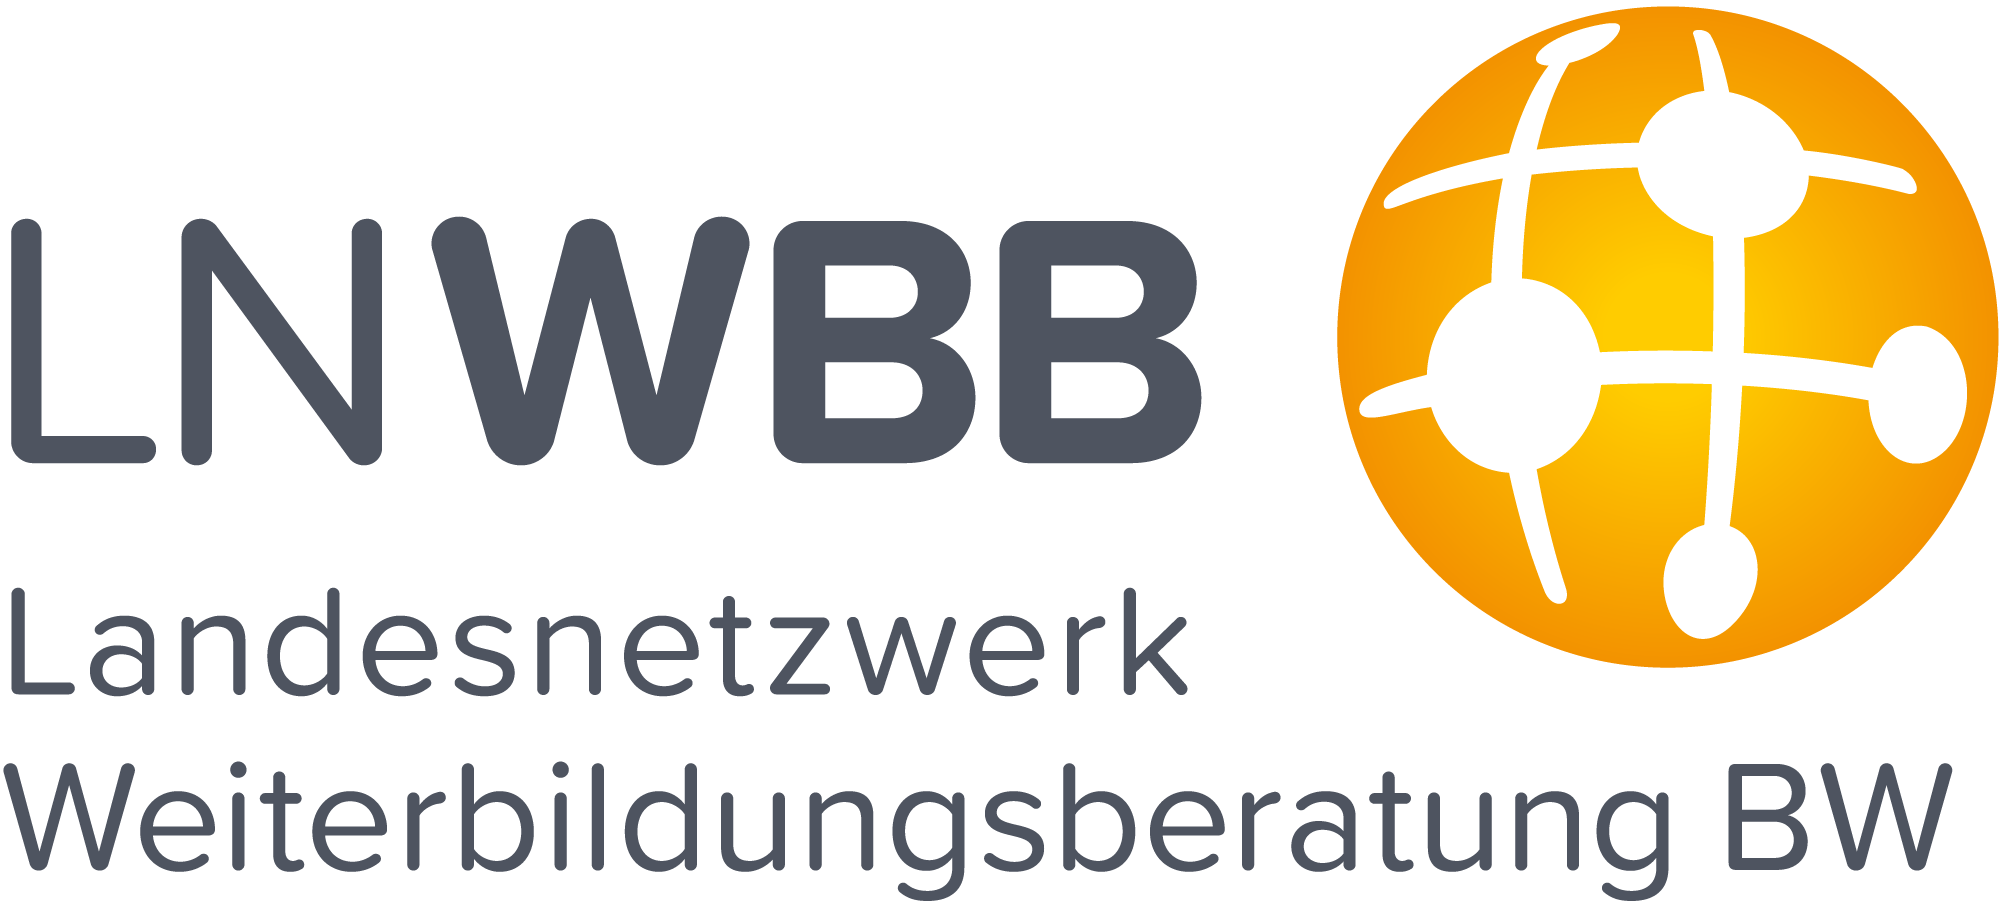 lnwbb_logo_rgb